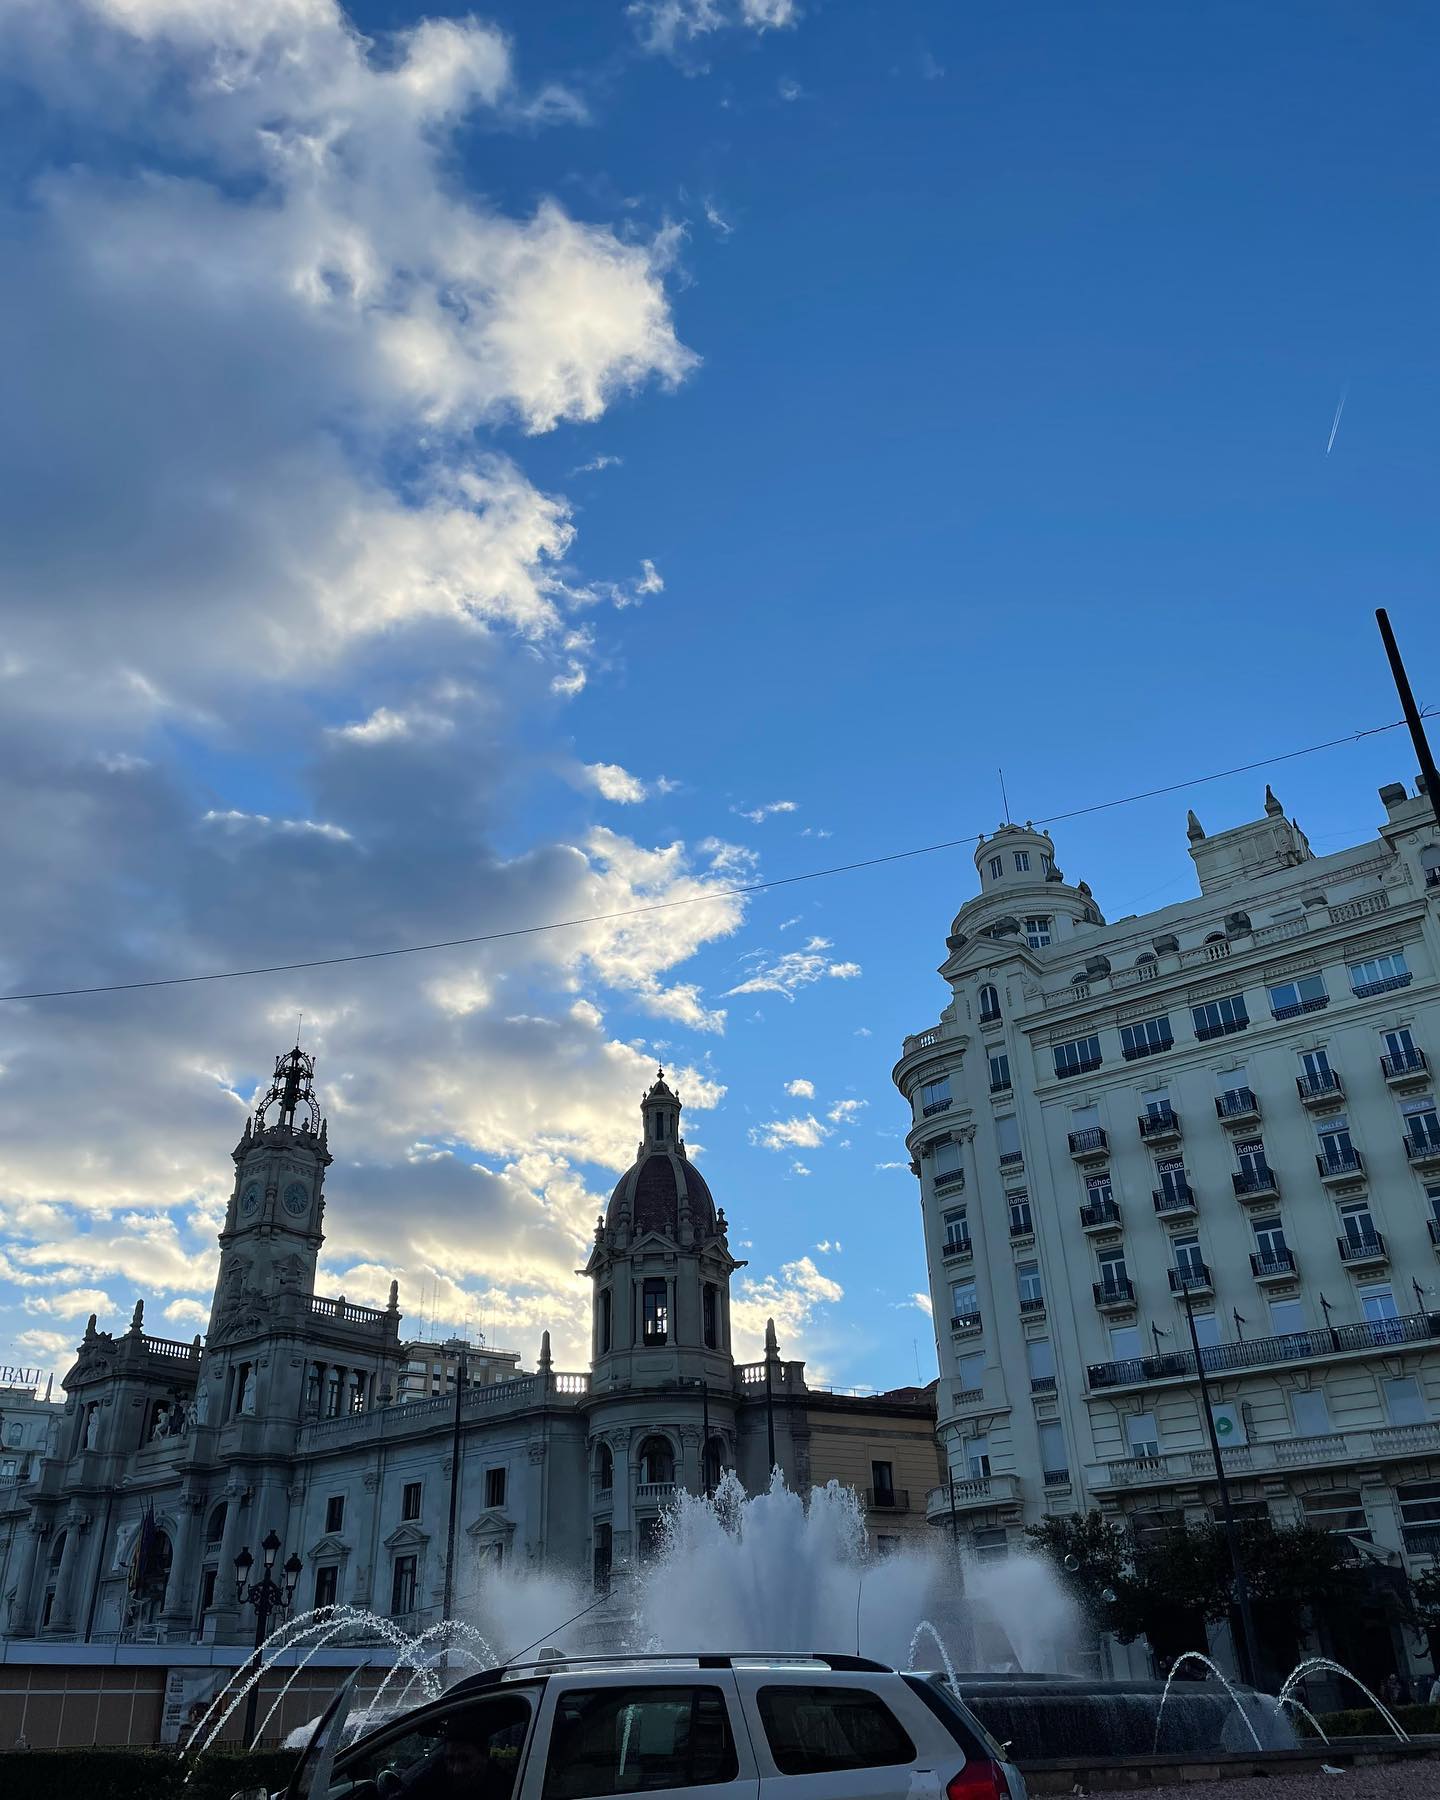 Passion for blue sky 🌌 
.
.
.
.
#valencia #weekend #holidays #instamood #picoftheday #photography #familytime #igersvalencia #spain